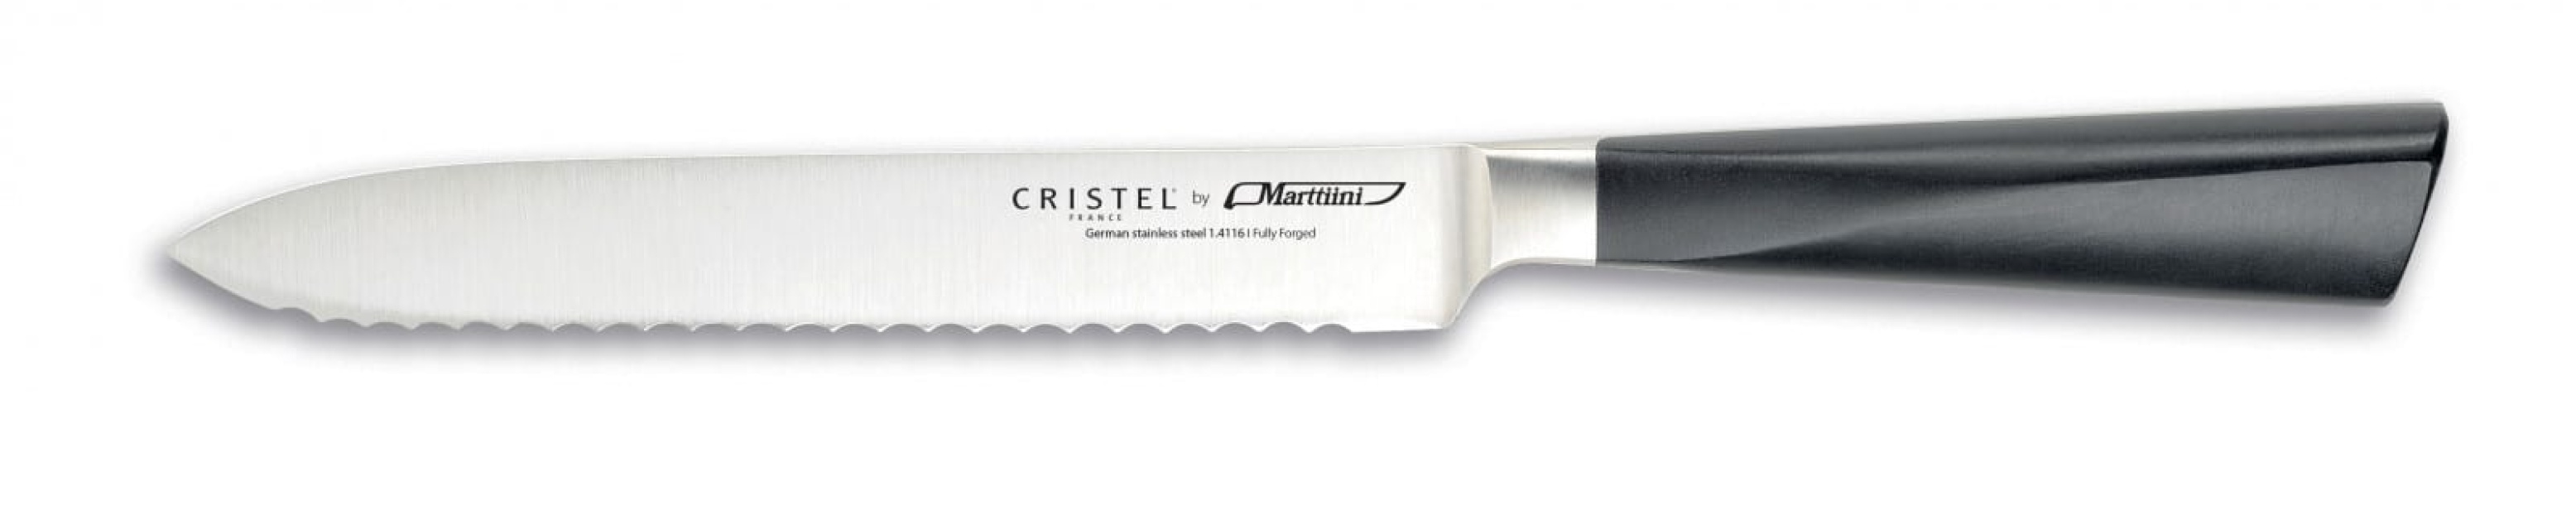 Tandad kniv, 14 cm - Cristel